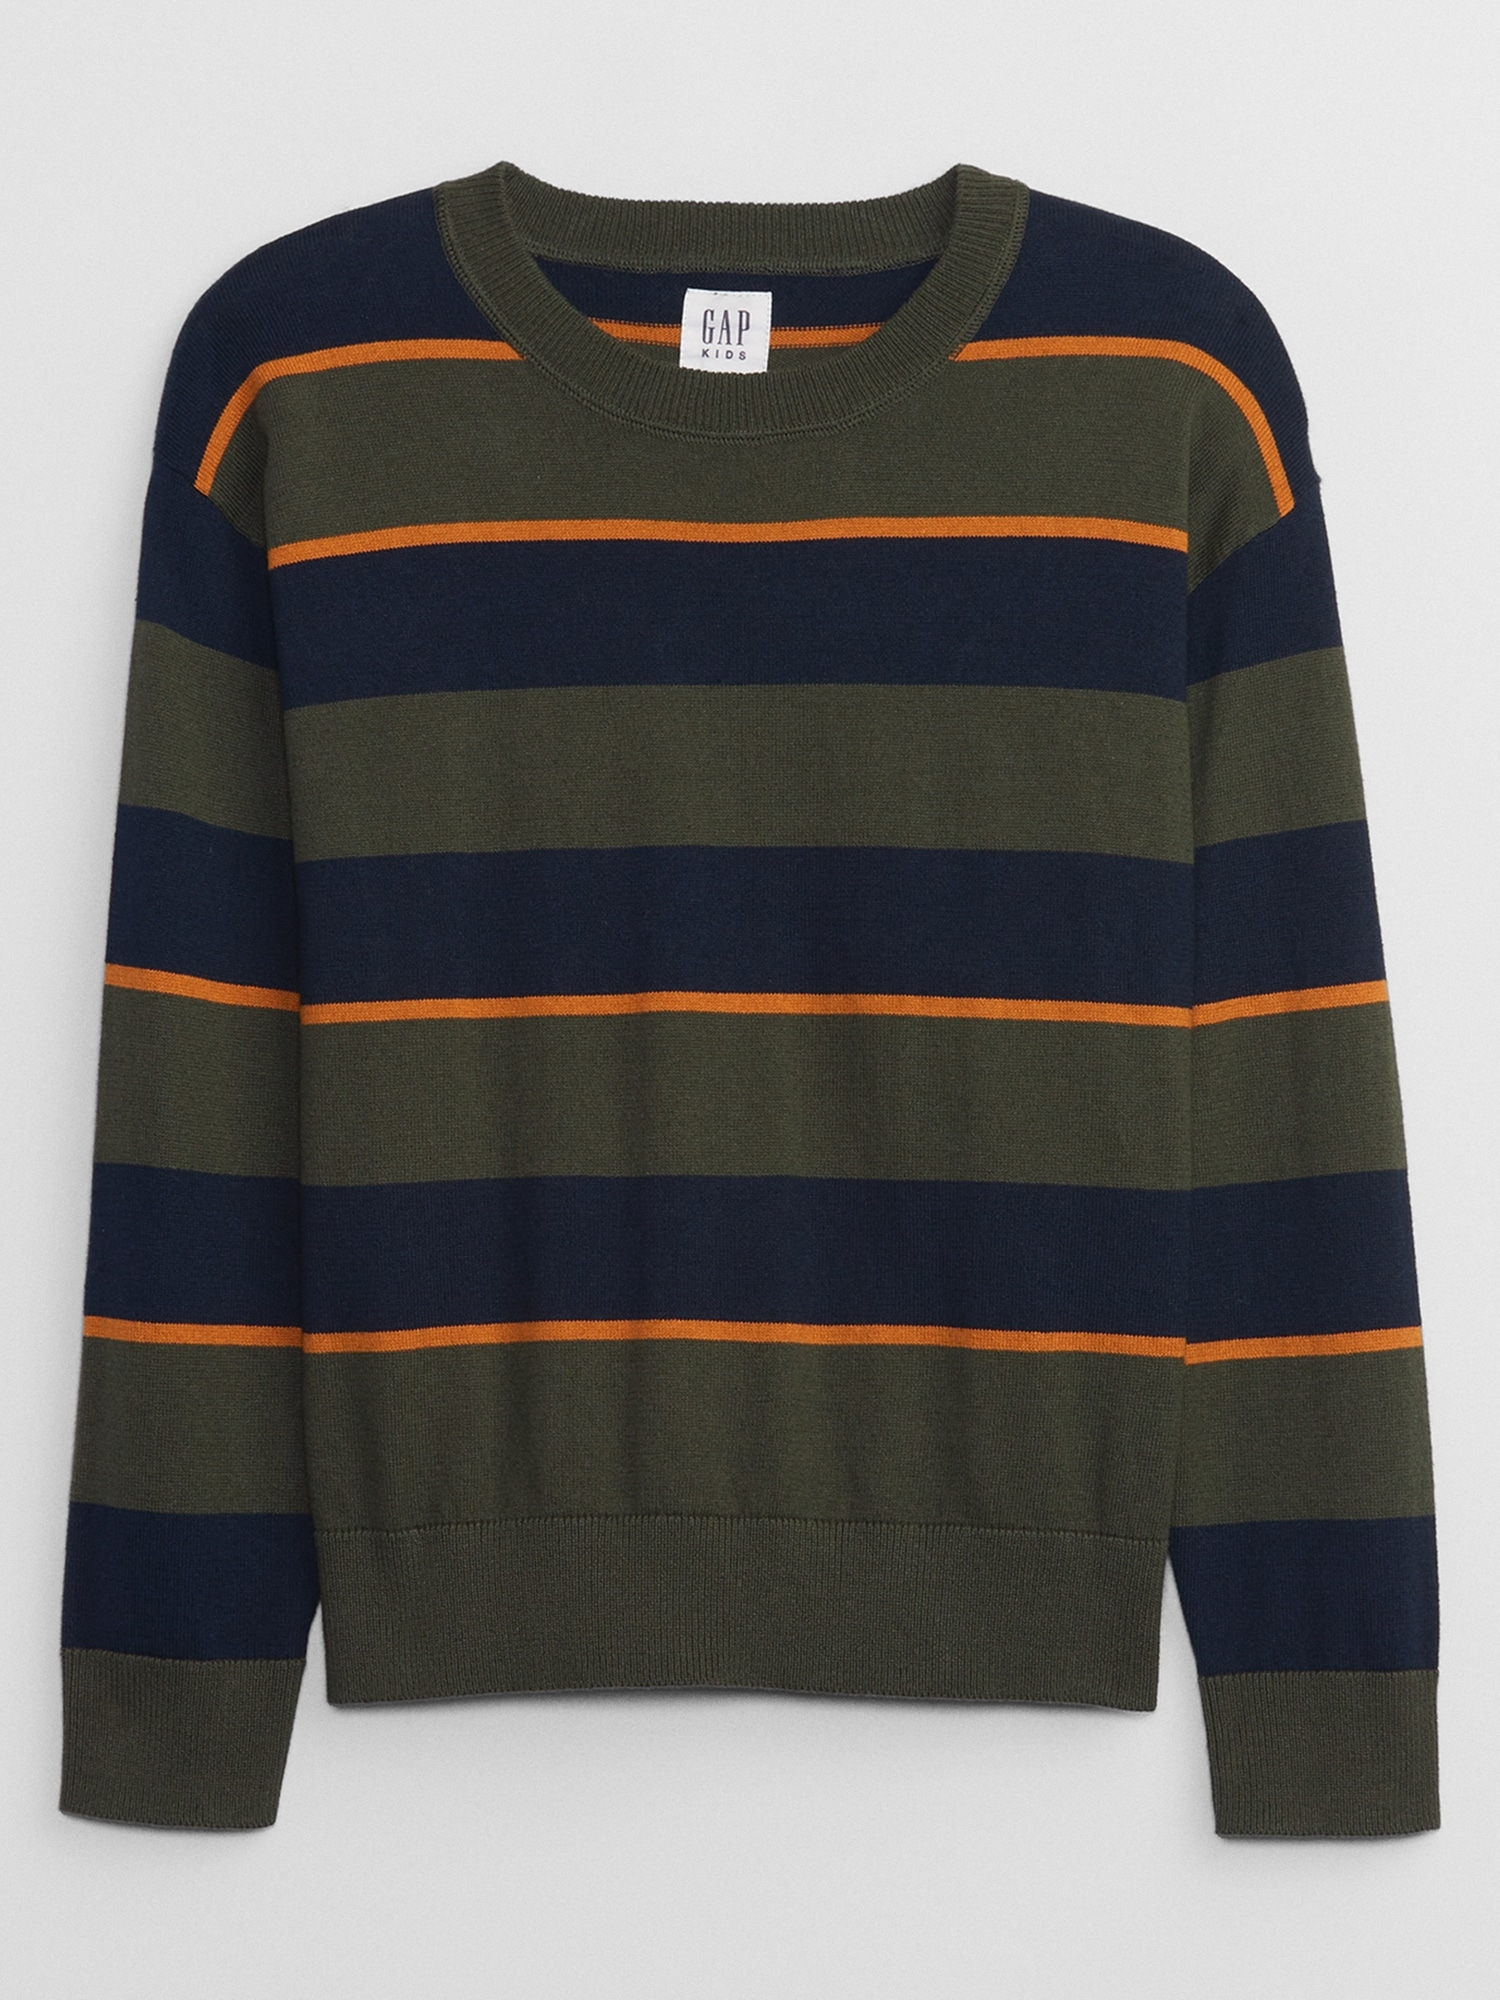 Crewneck Factory | Kids Gap Stripe Sweater